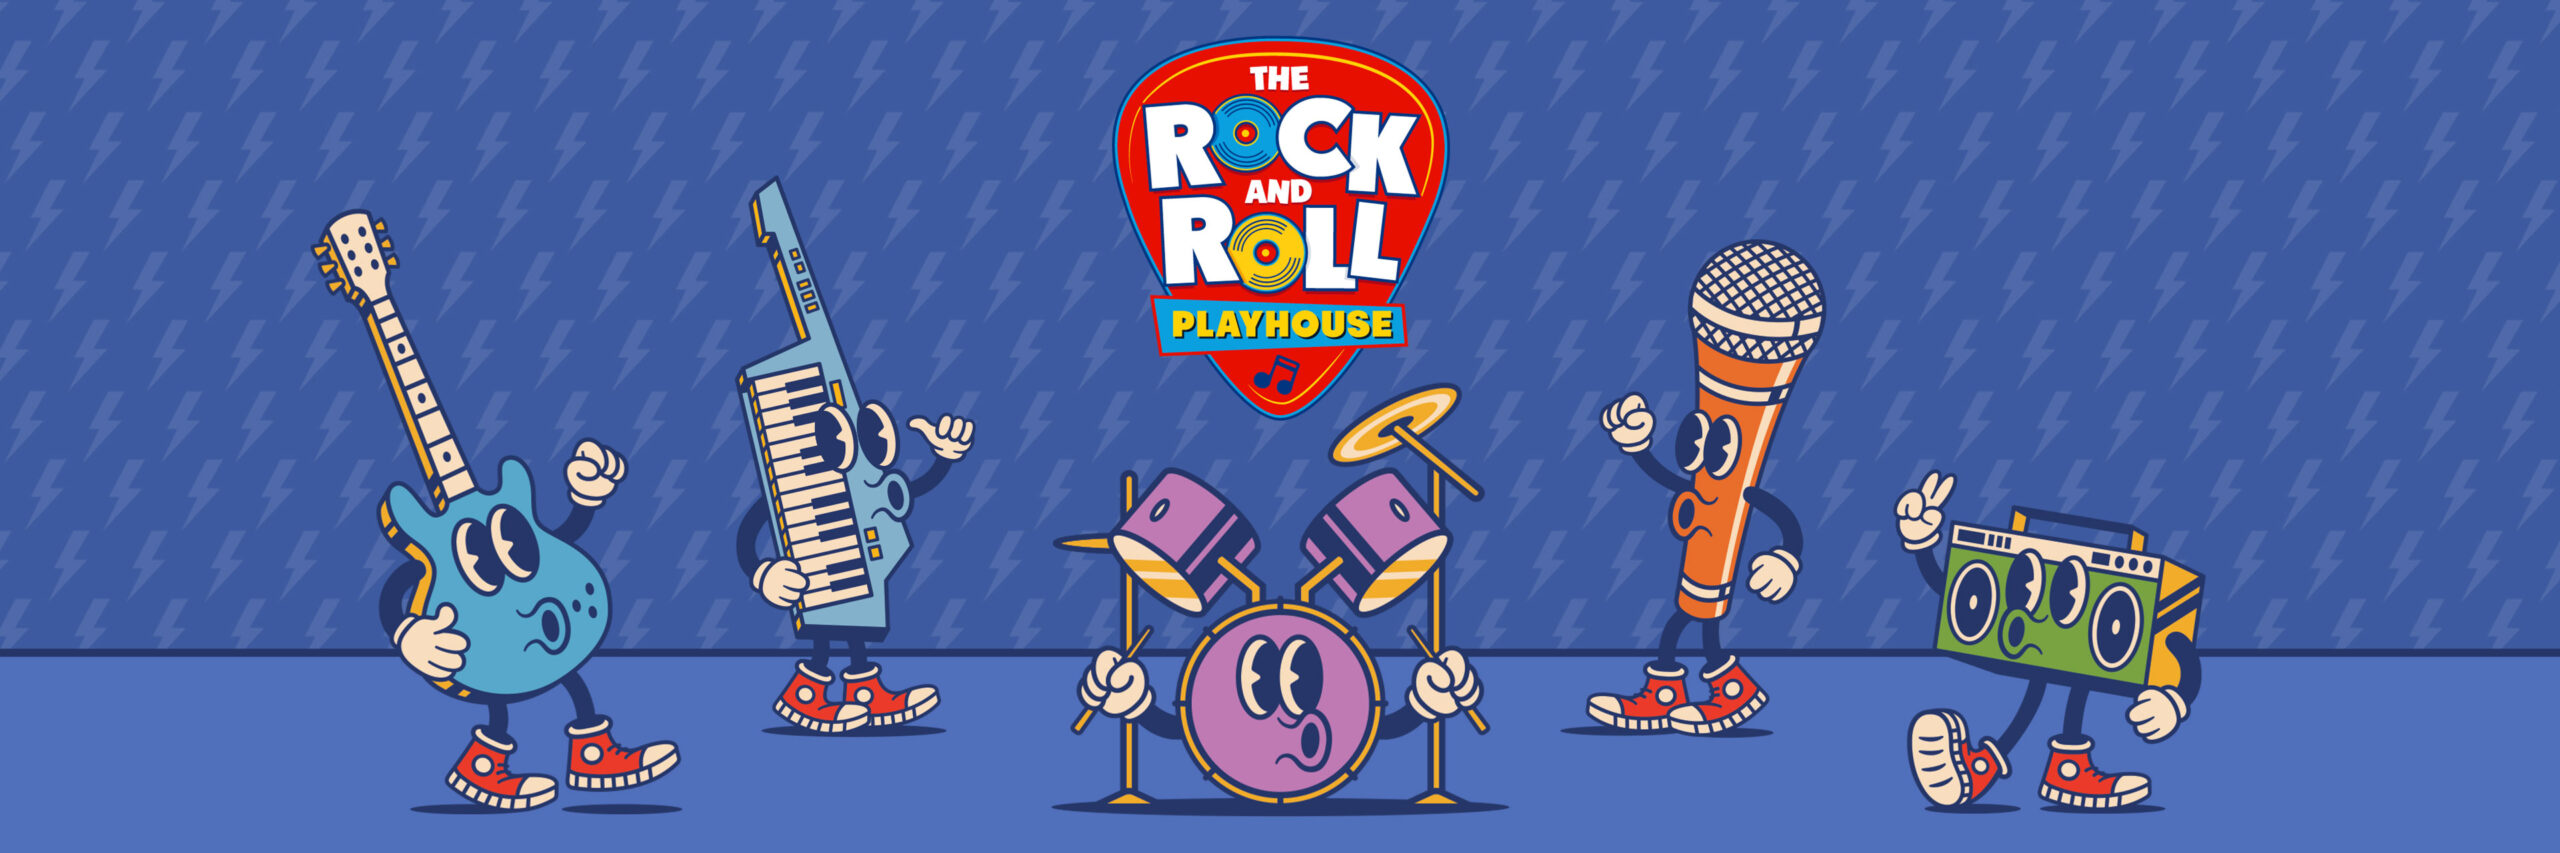 Rock 'n' Roll Music (album) - Wikipedia